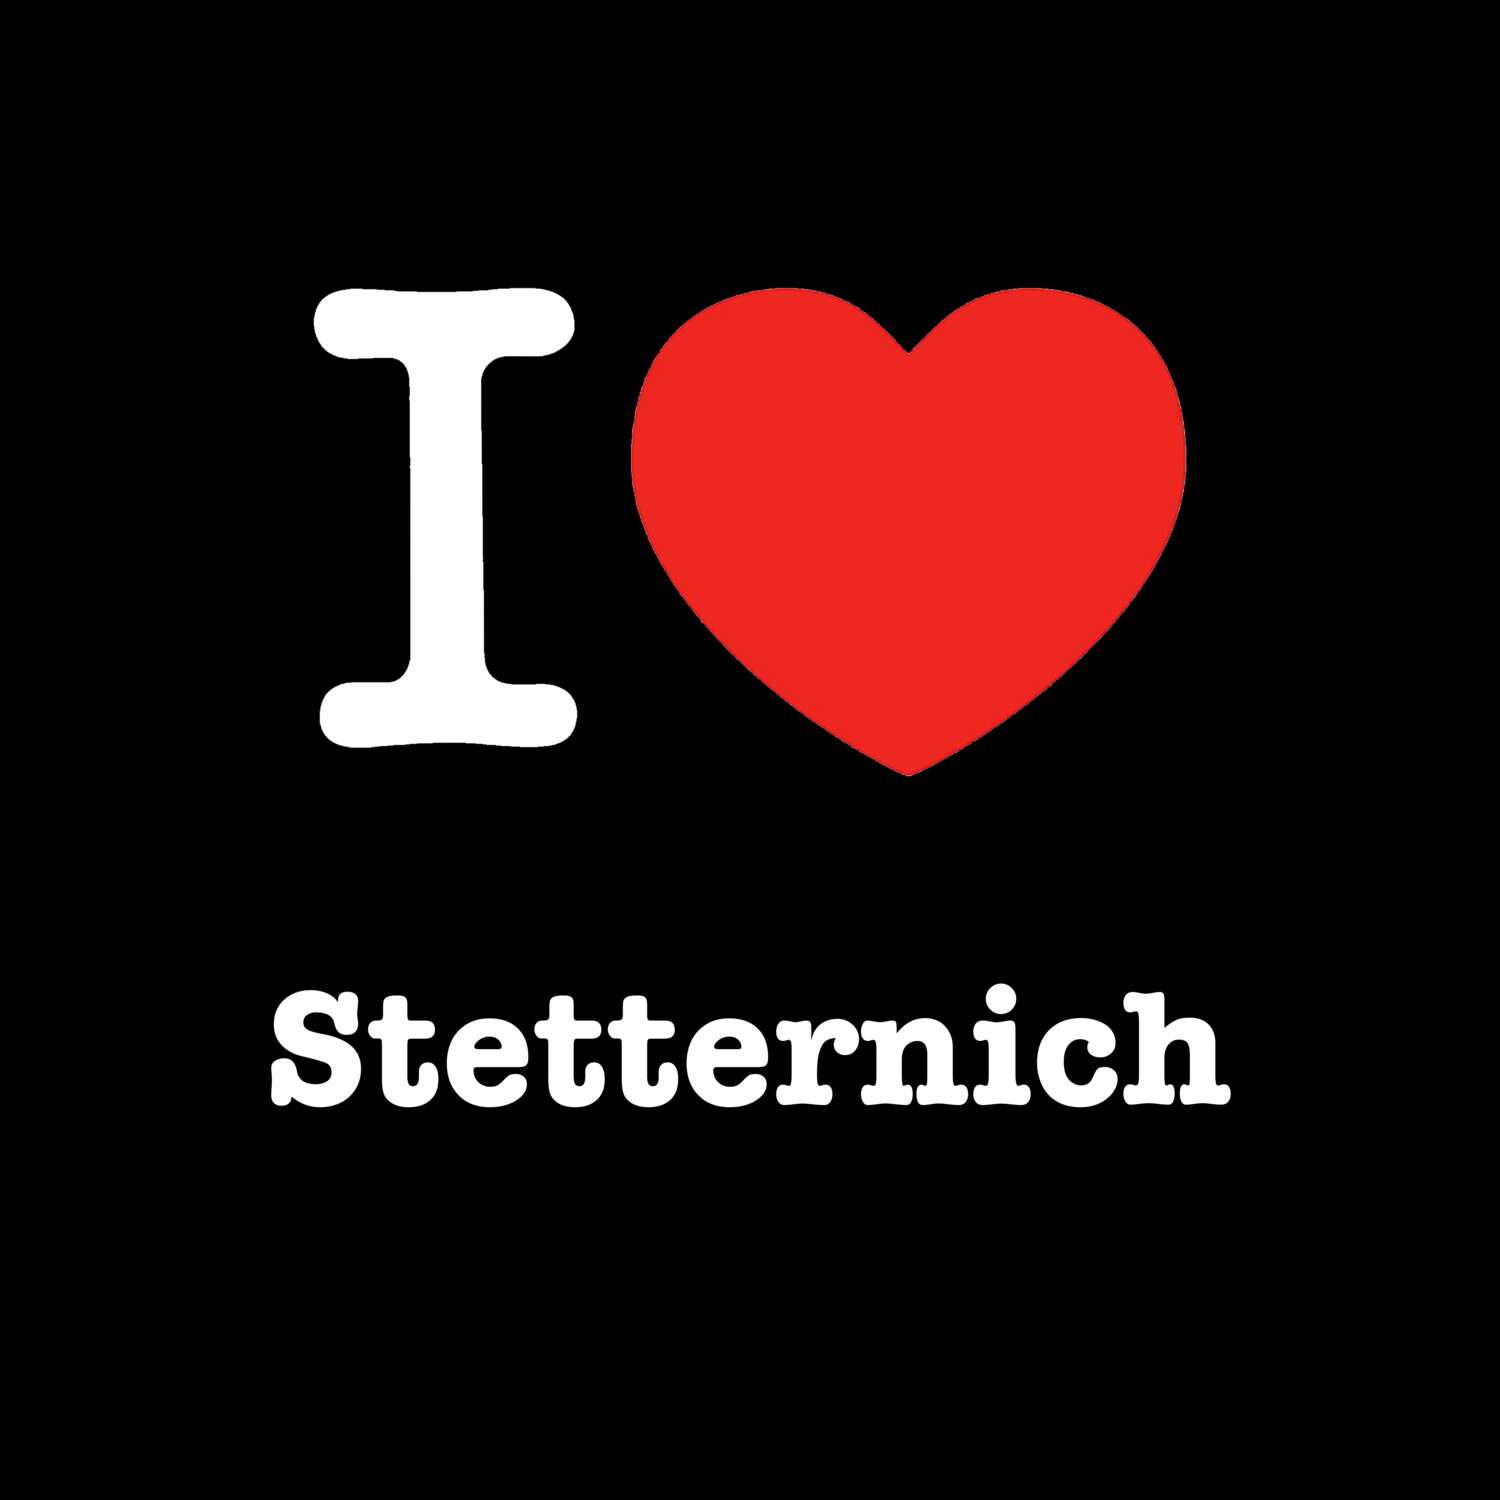 Stetternich T-Shirt »I love«